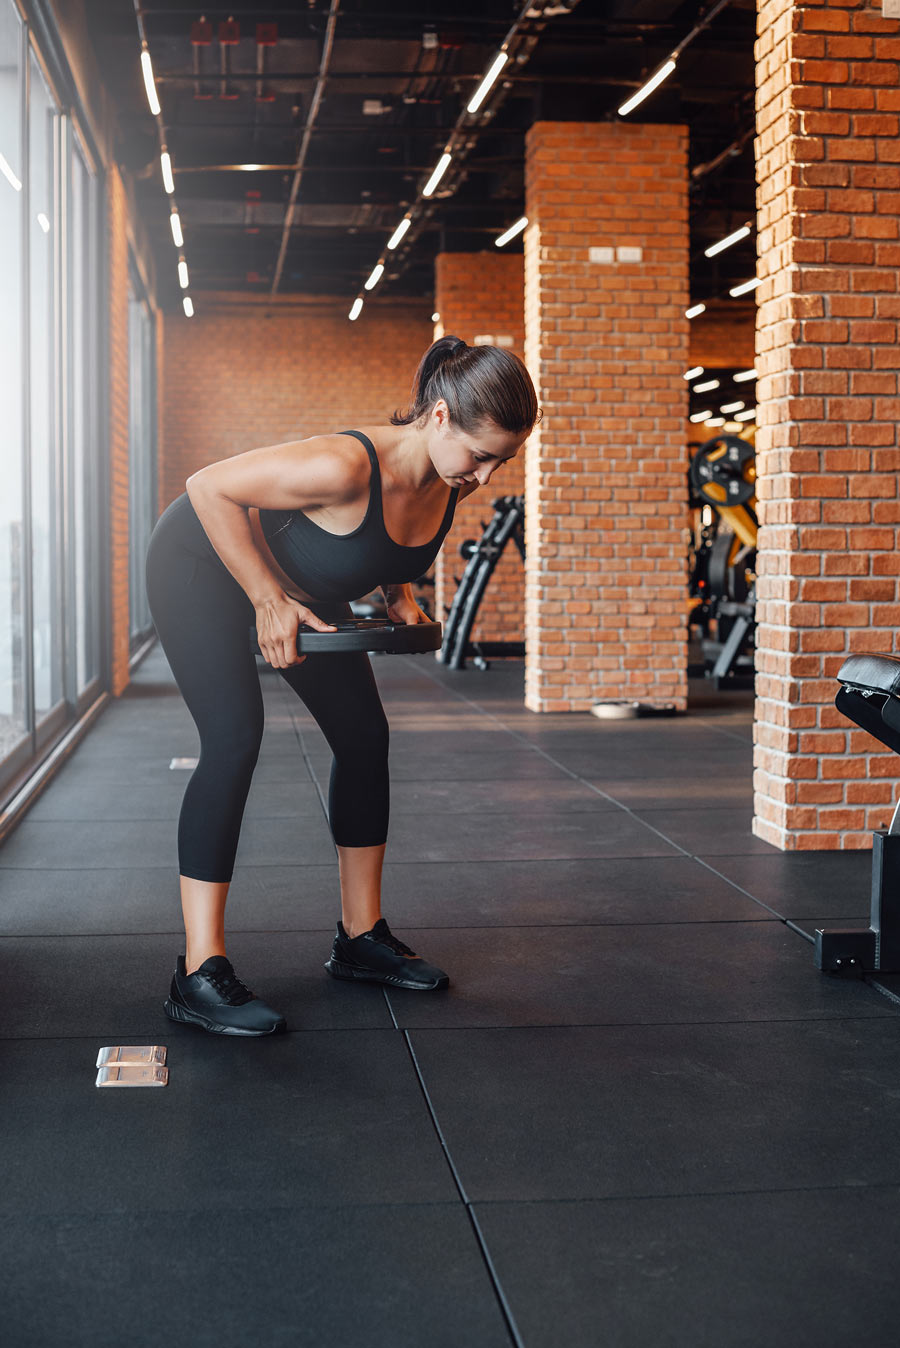 female bodybuilder trains lifting a dumbell in mod 2021 08 31 21 30 11 utc